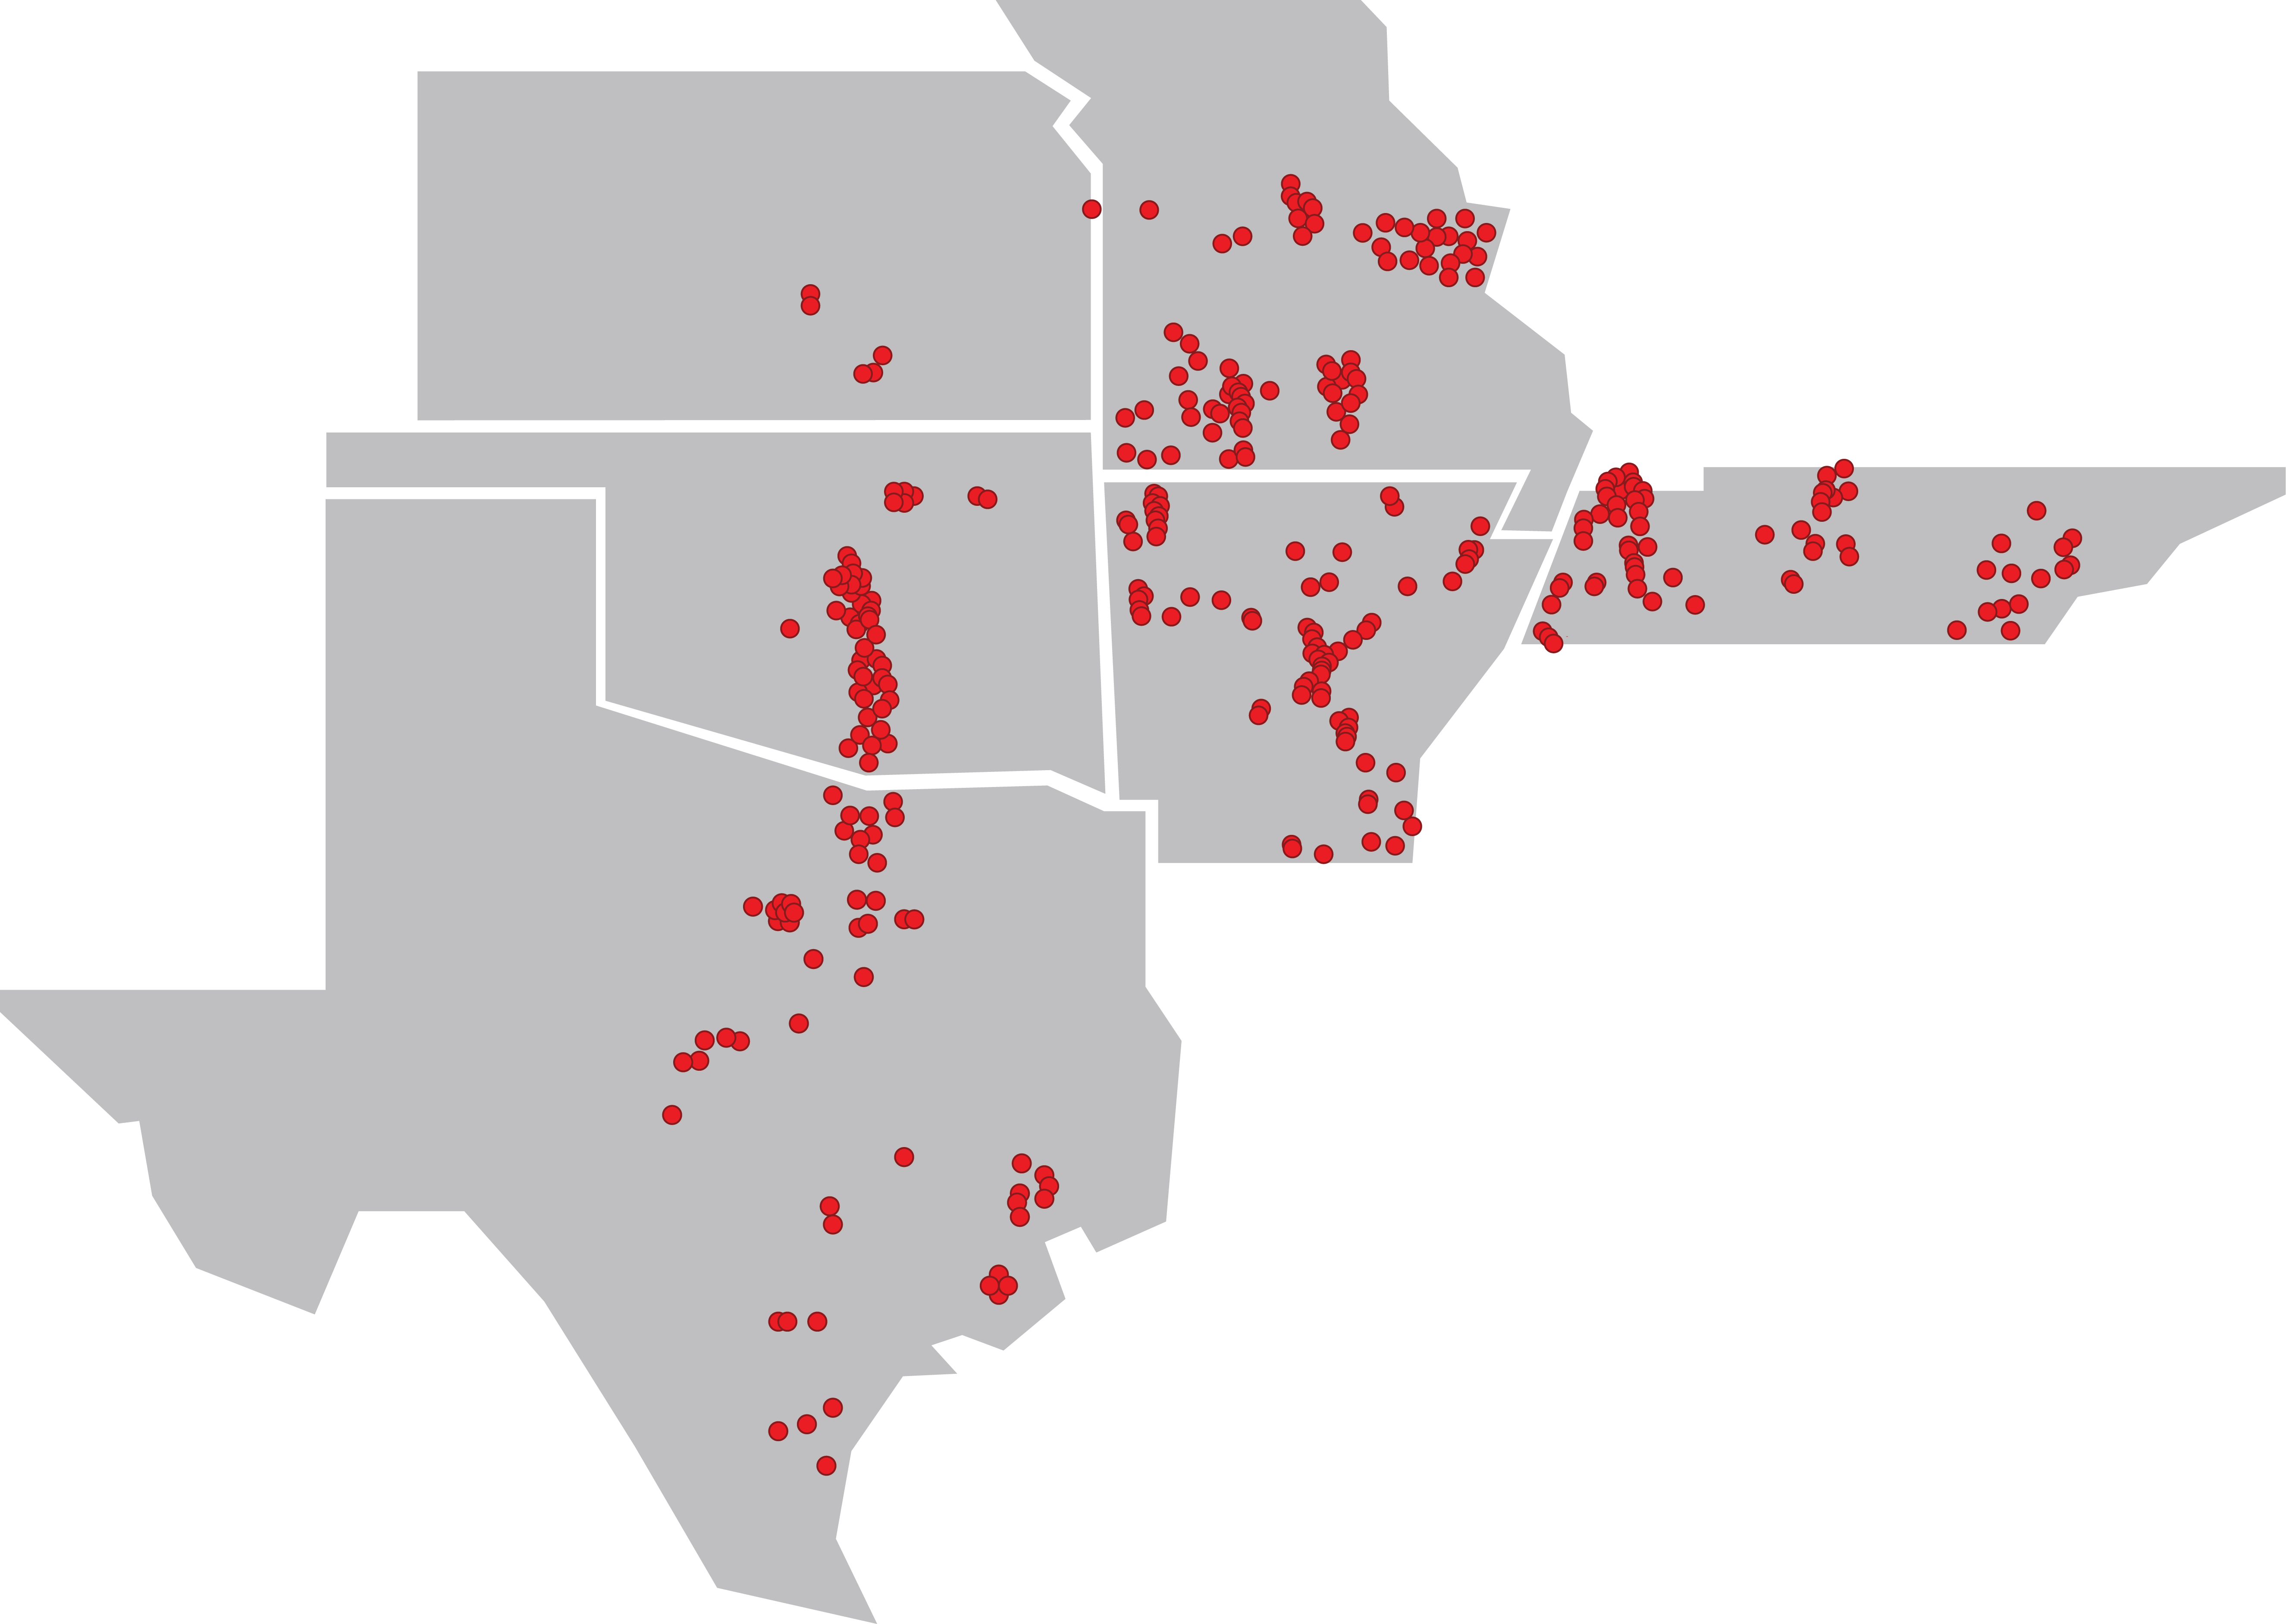 Map of states that contain a Simmons Bank presence: Texas, Oklahoma, Kansas, Missouri, Illinois, Arkansas and Tennessee